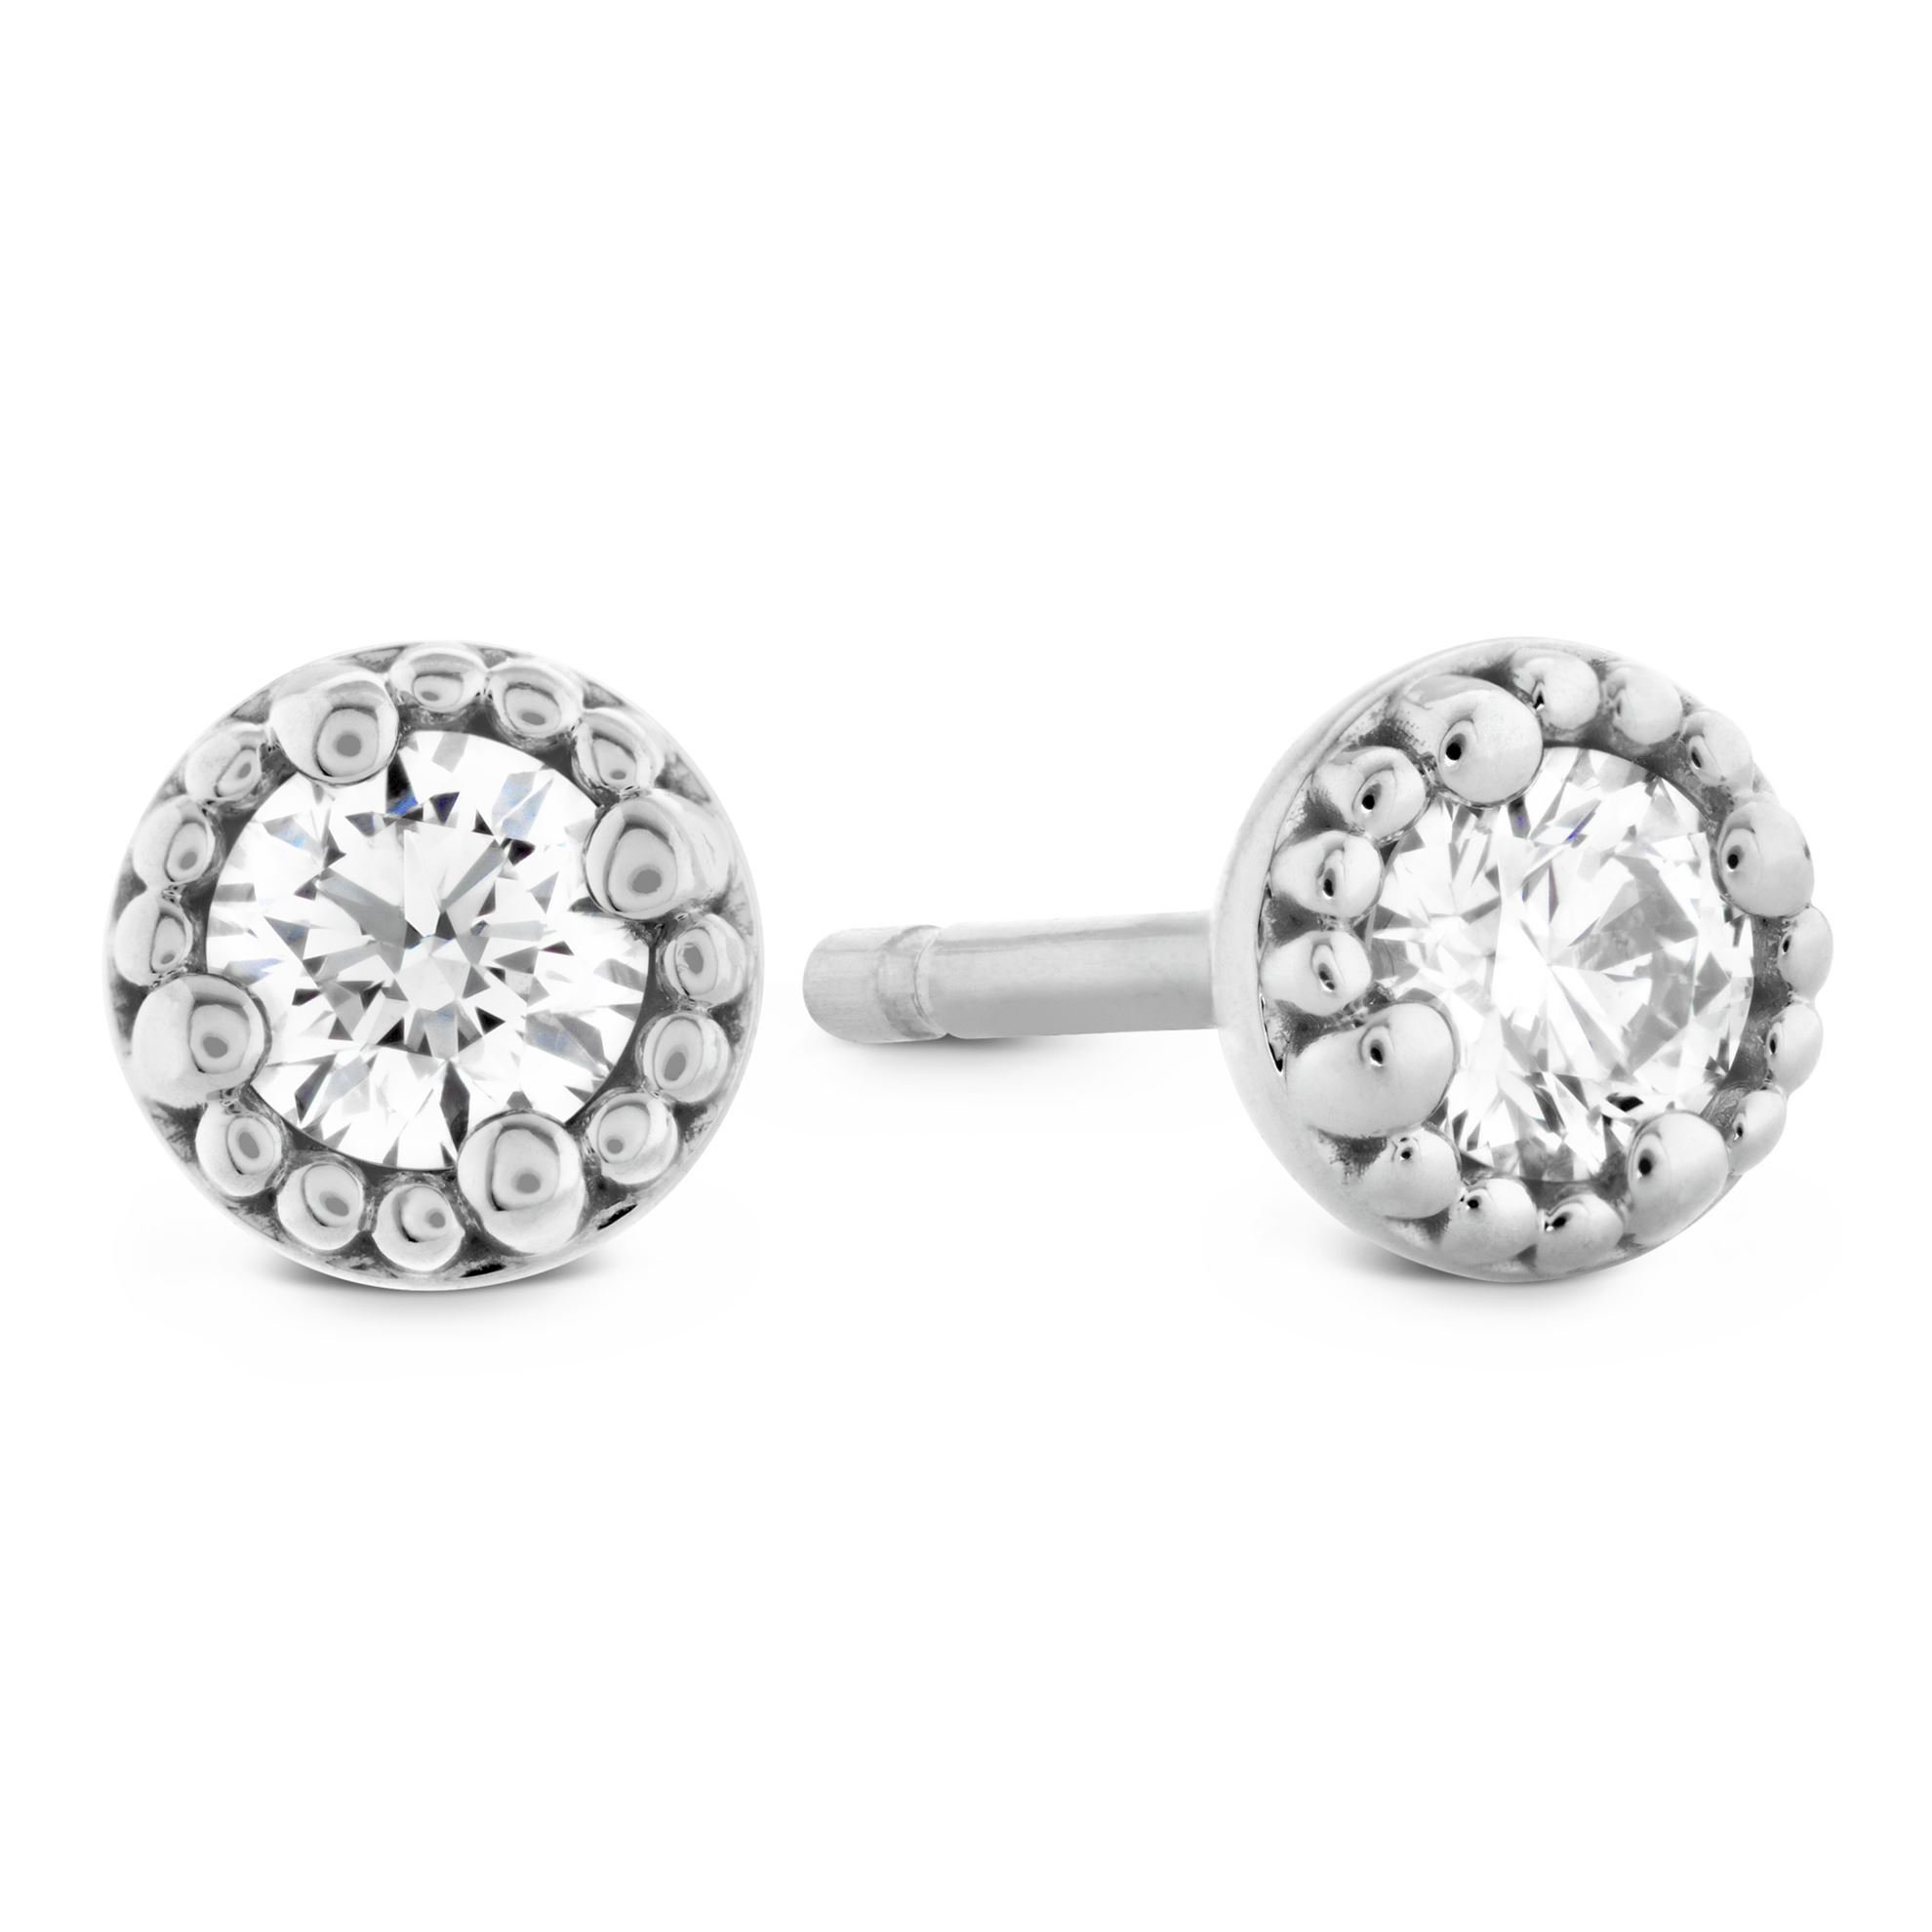 https://www.arthursjewelers.com/content/images/thumbs/Original/liliana-milgrain-single-diamond-earrings-179452586.jpeg